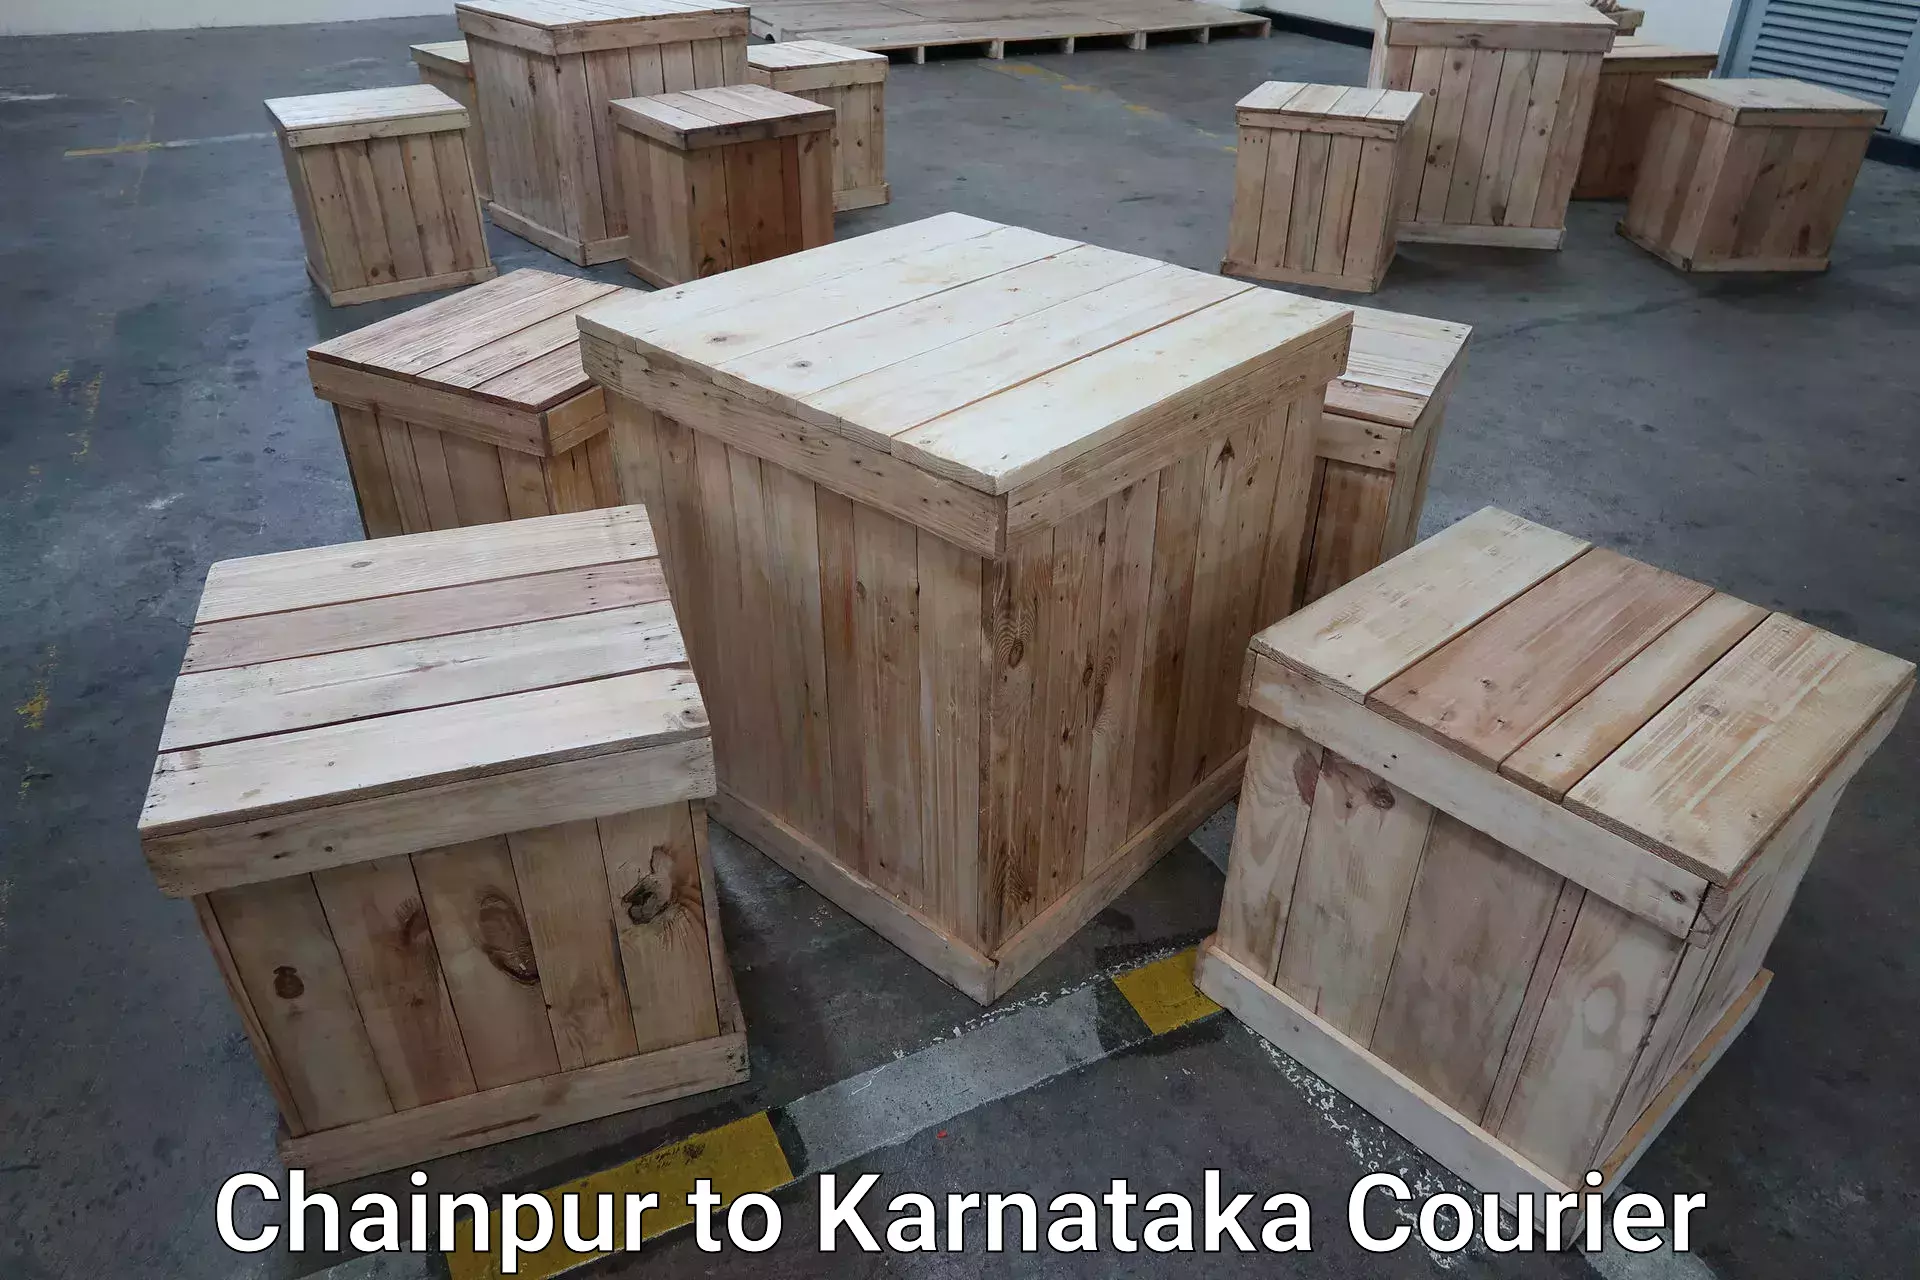 Luggage shipment specialists Chainpur to Karnataka